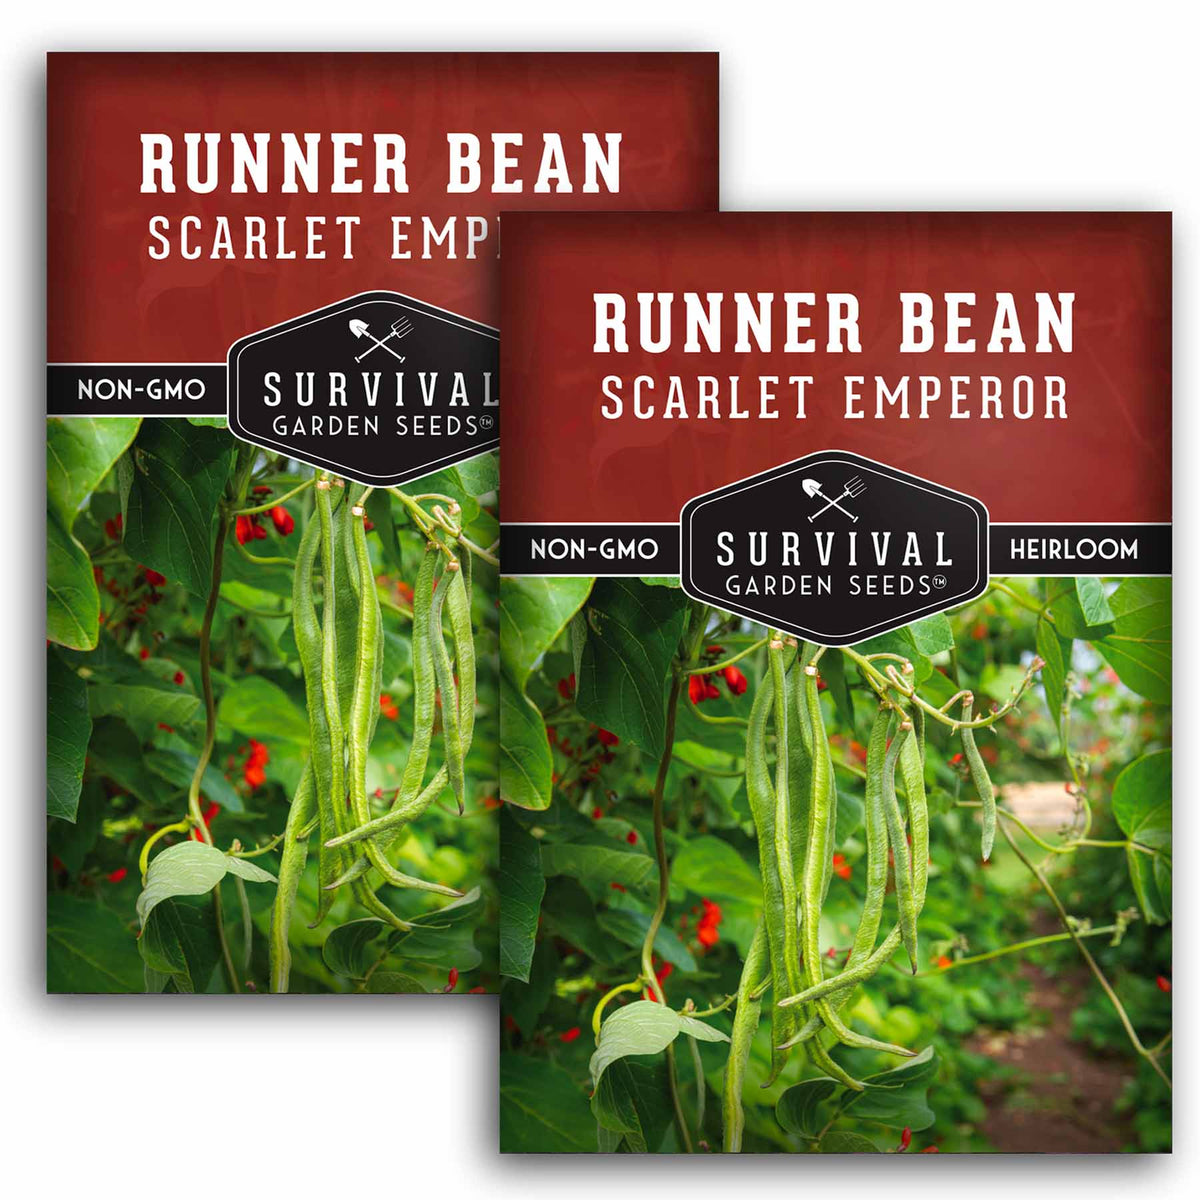 2 packets of Scarlet Emperor Runner Bean seeds